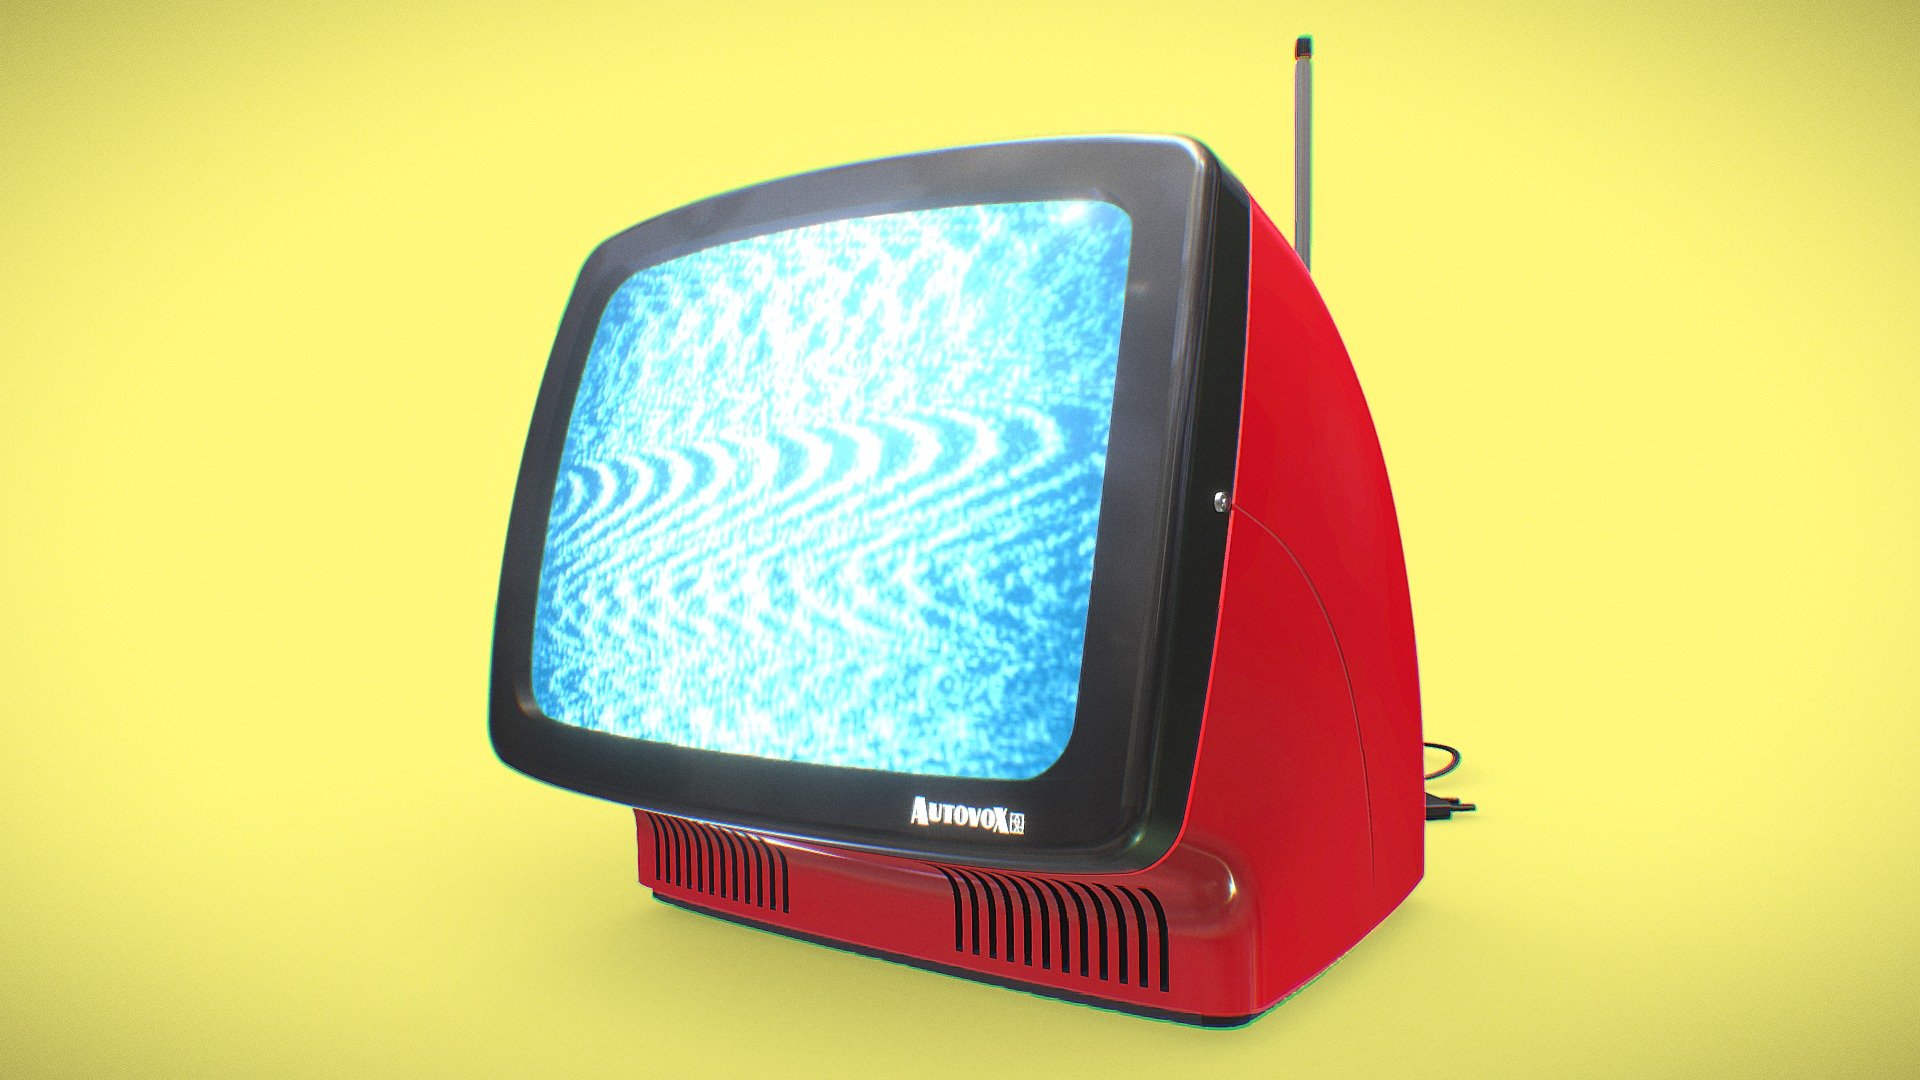 Autovox Linea 1 Television
Modelled by Kağan Çağında - Autovox Linea 1 Television - 3D model by kaganproject 3d model